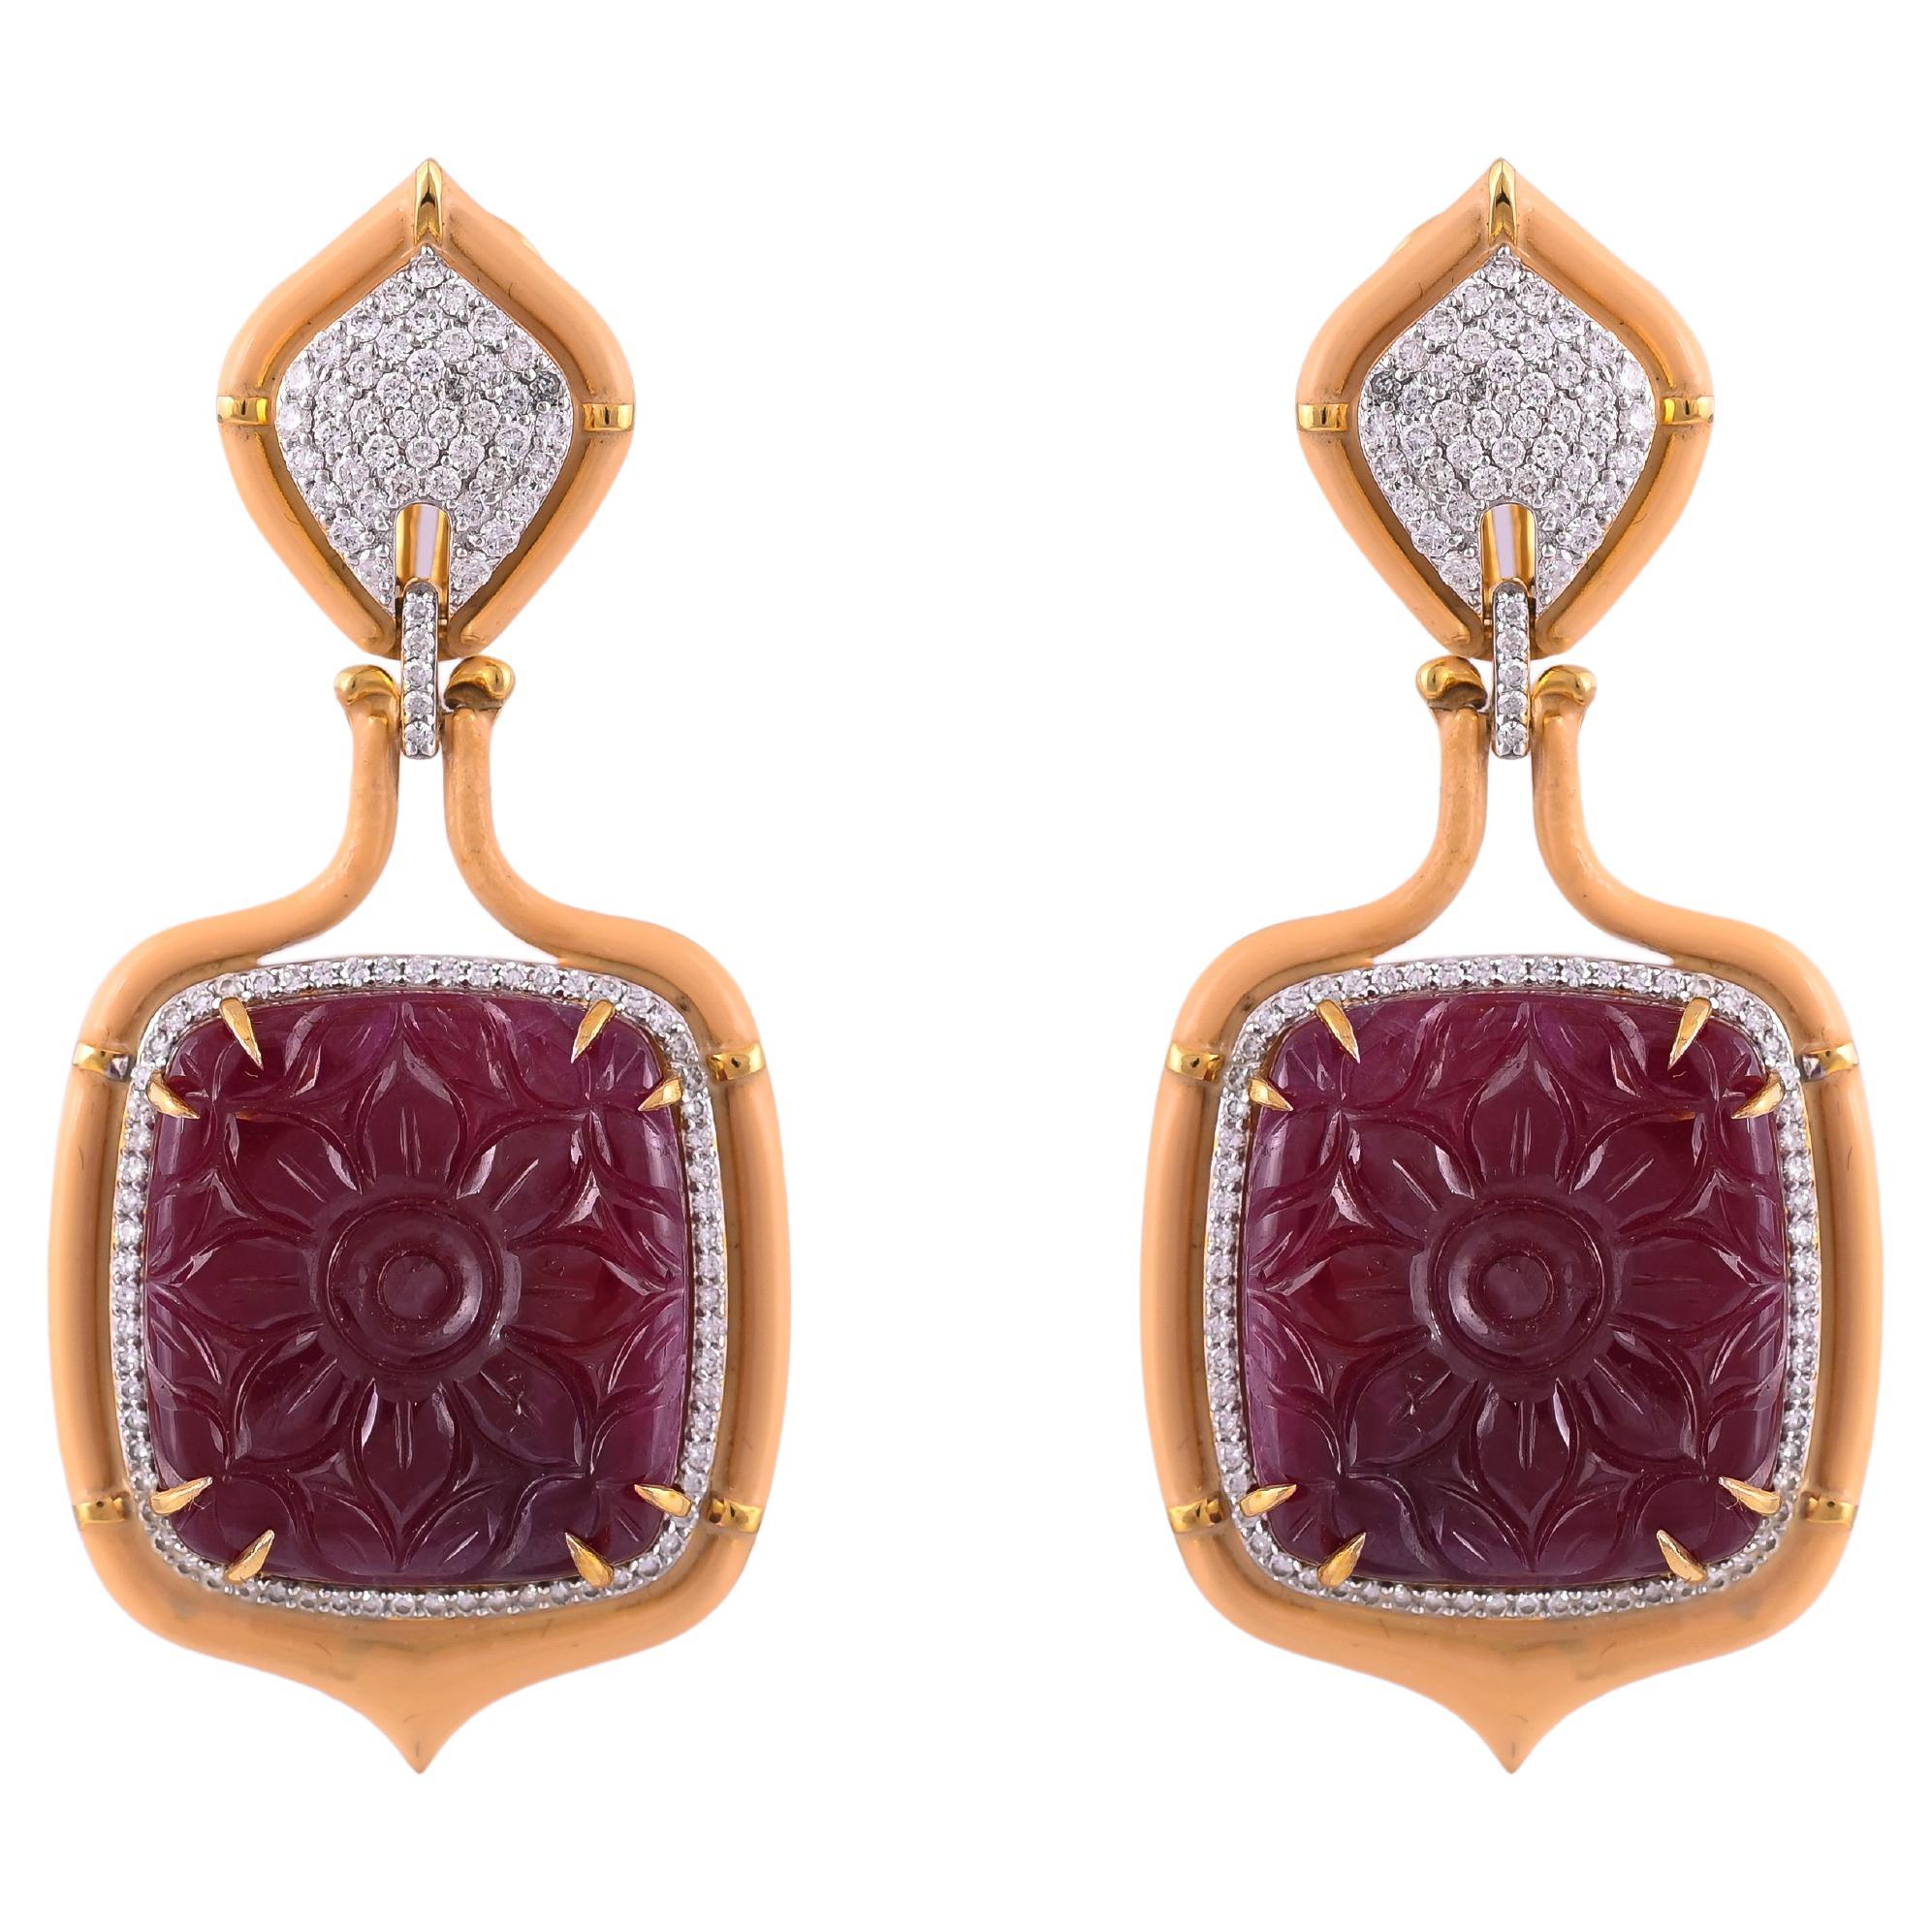 86.65 Carat Natural Ruby Carved Enamel and Diamond Earrings Set in 18 Karat Gold